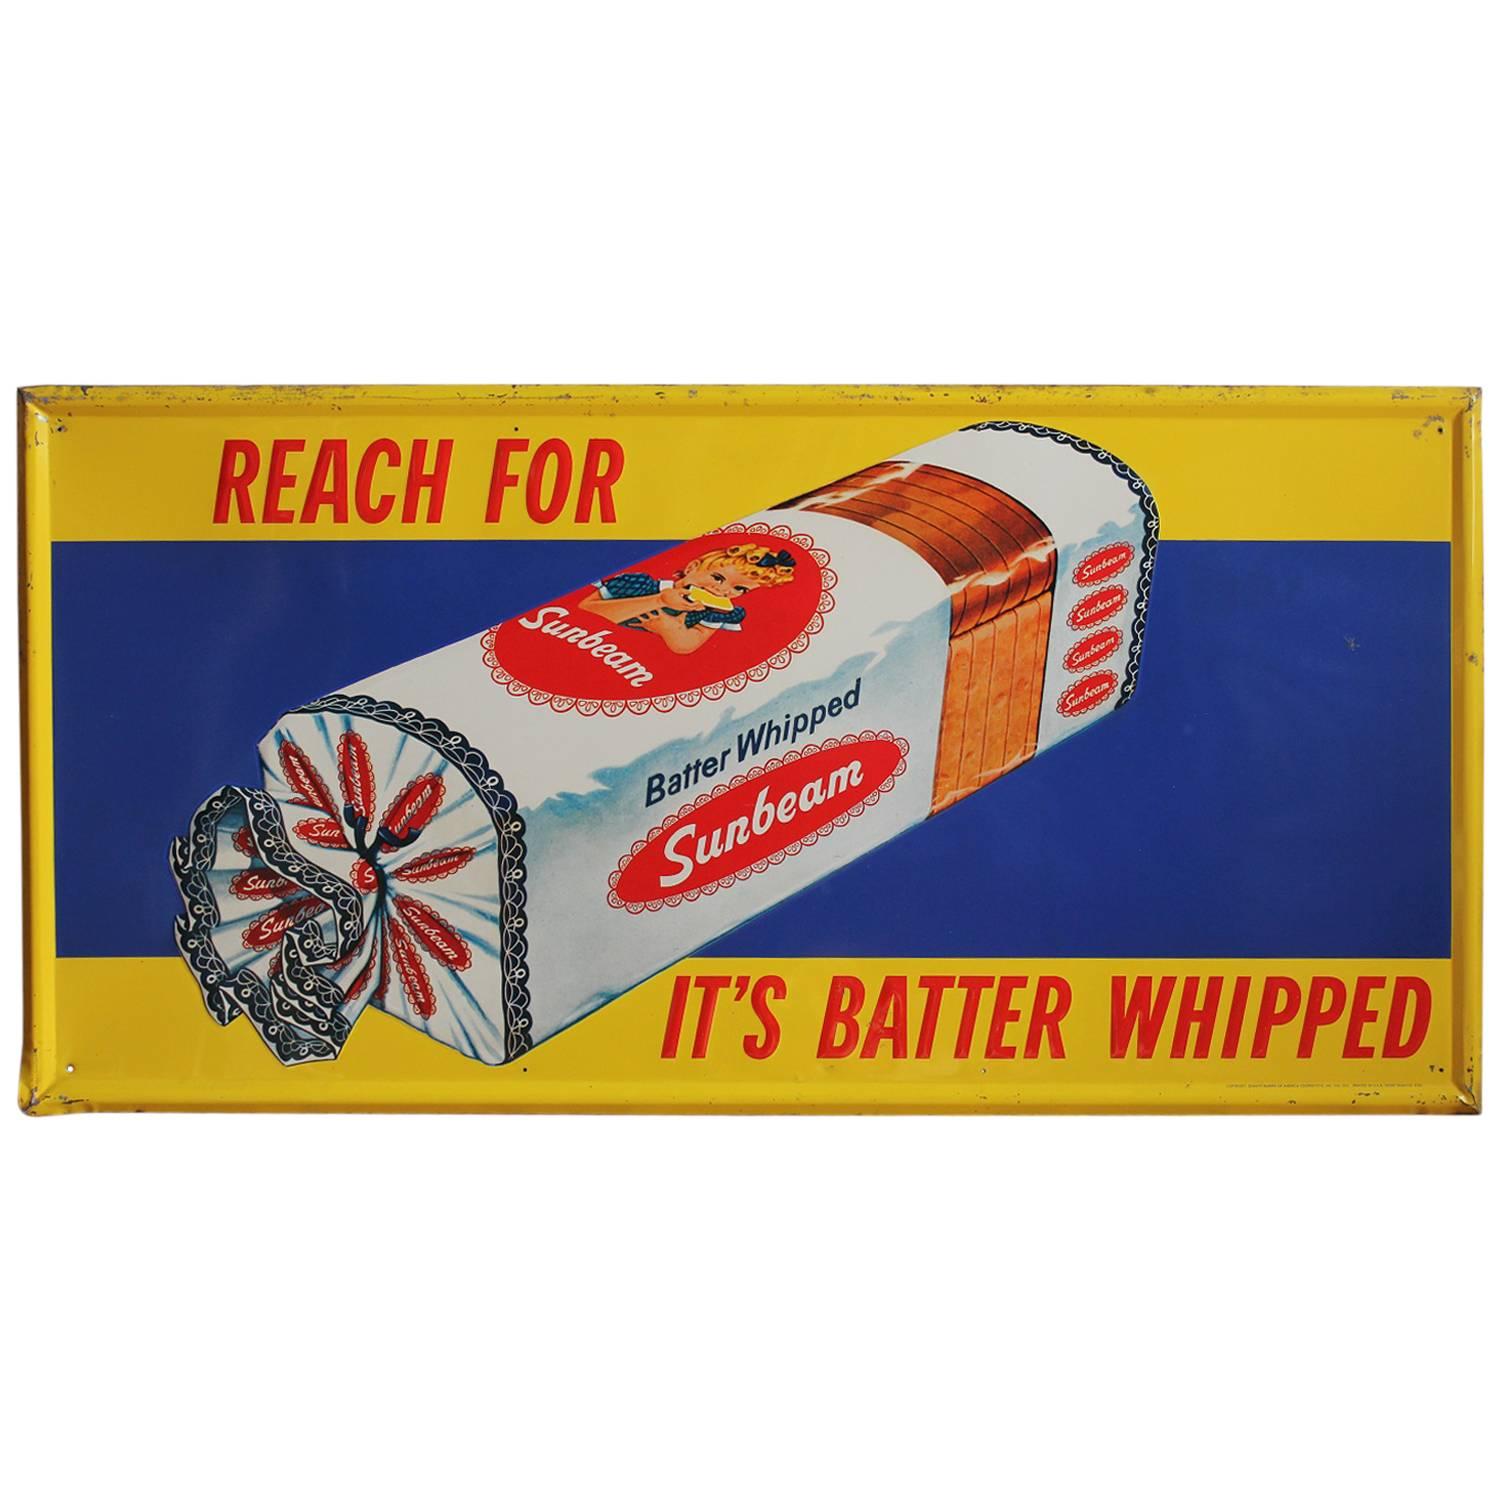 Original 1960s Metal Advertising Sign for Sunbeam Bread For Sale